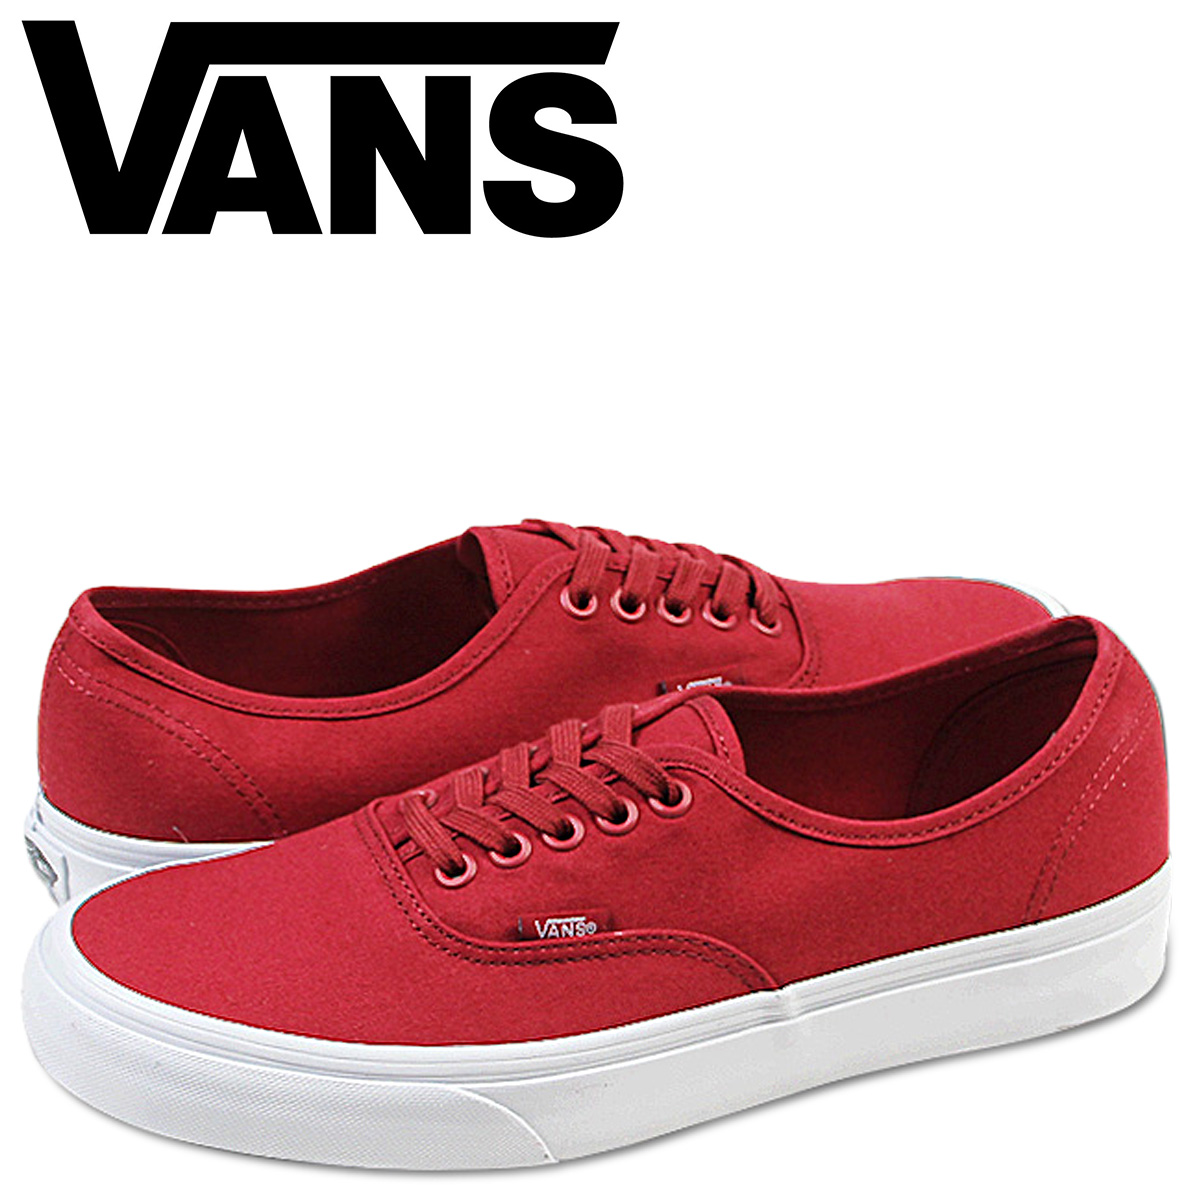 red vans shoes for men cheap online